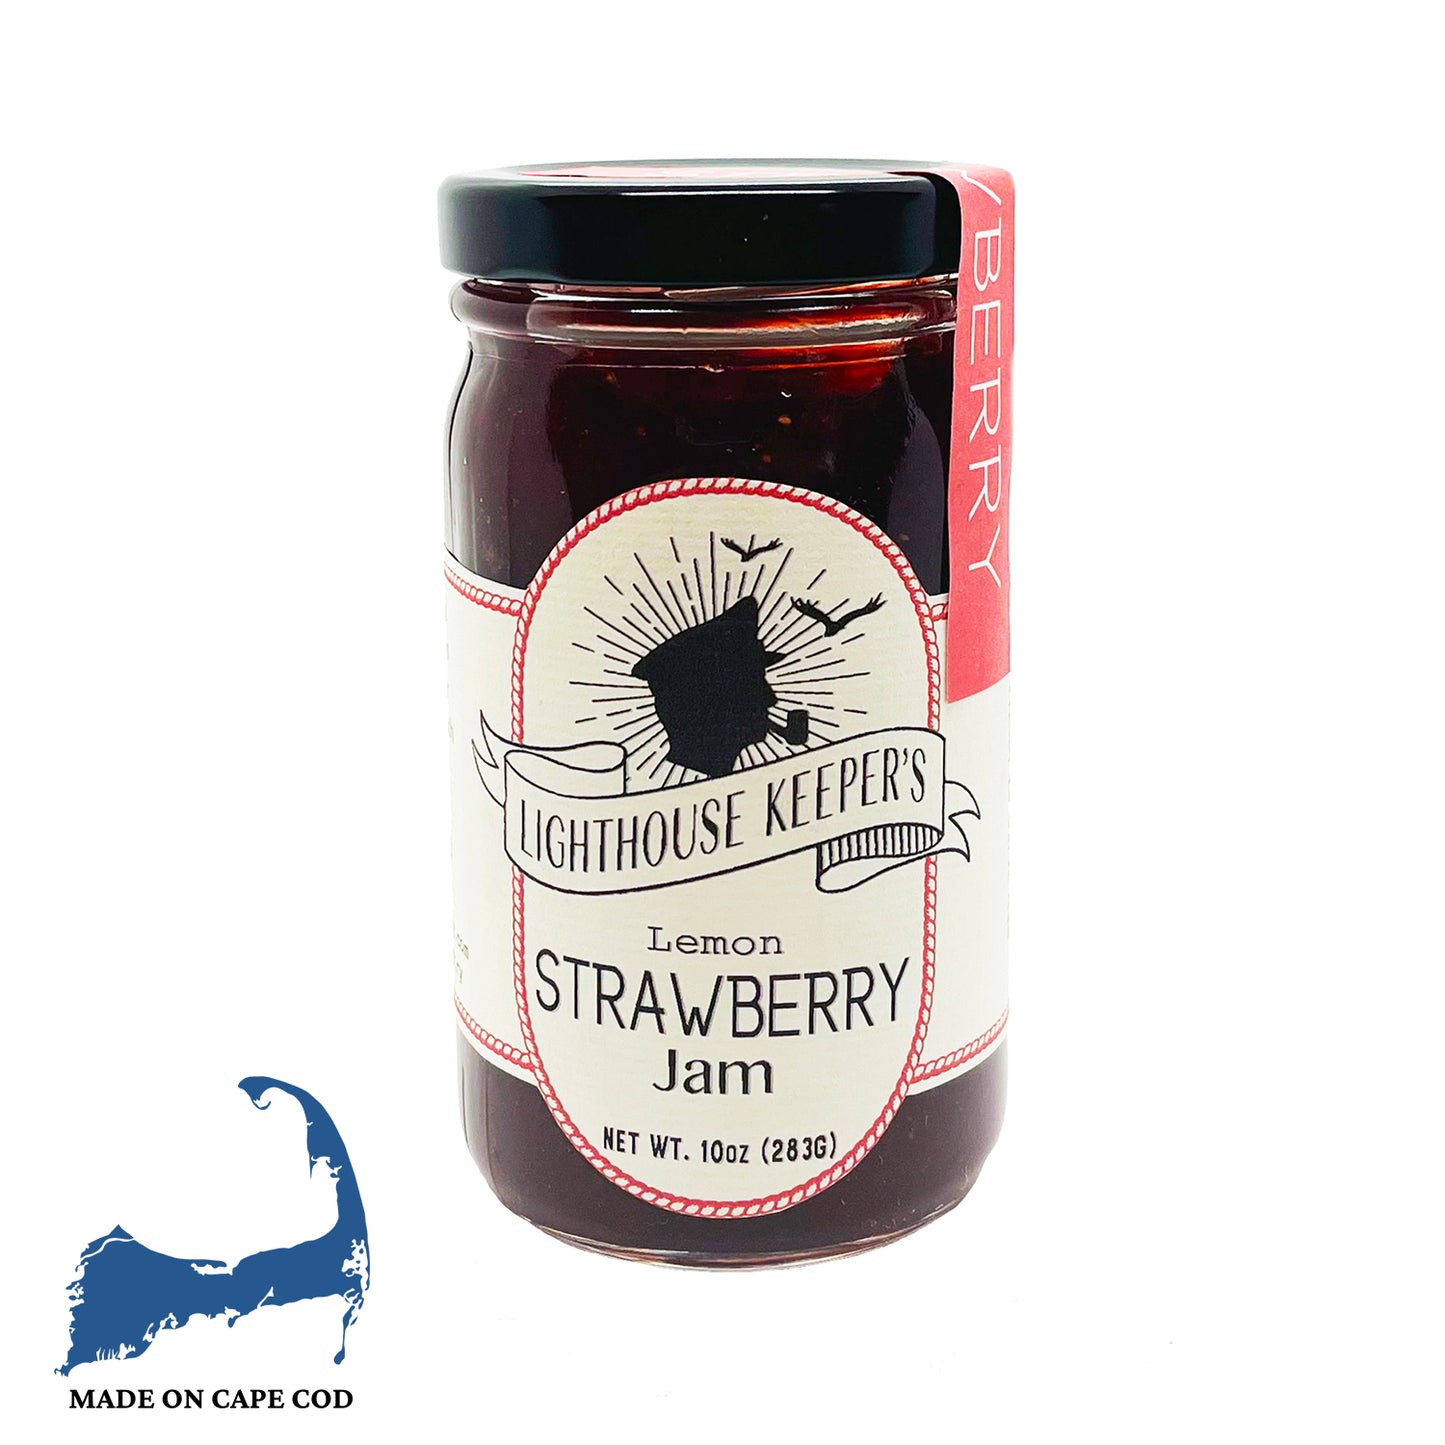 Lemon Strawberry Jam - Lighthouse Keeper's Pantry